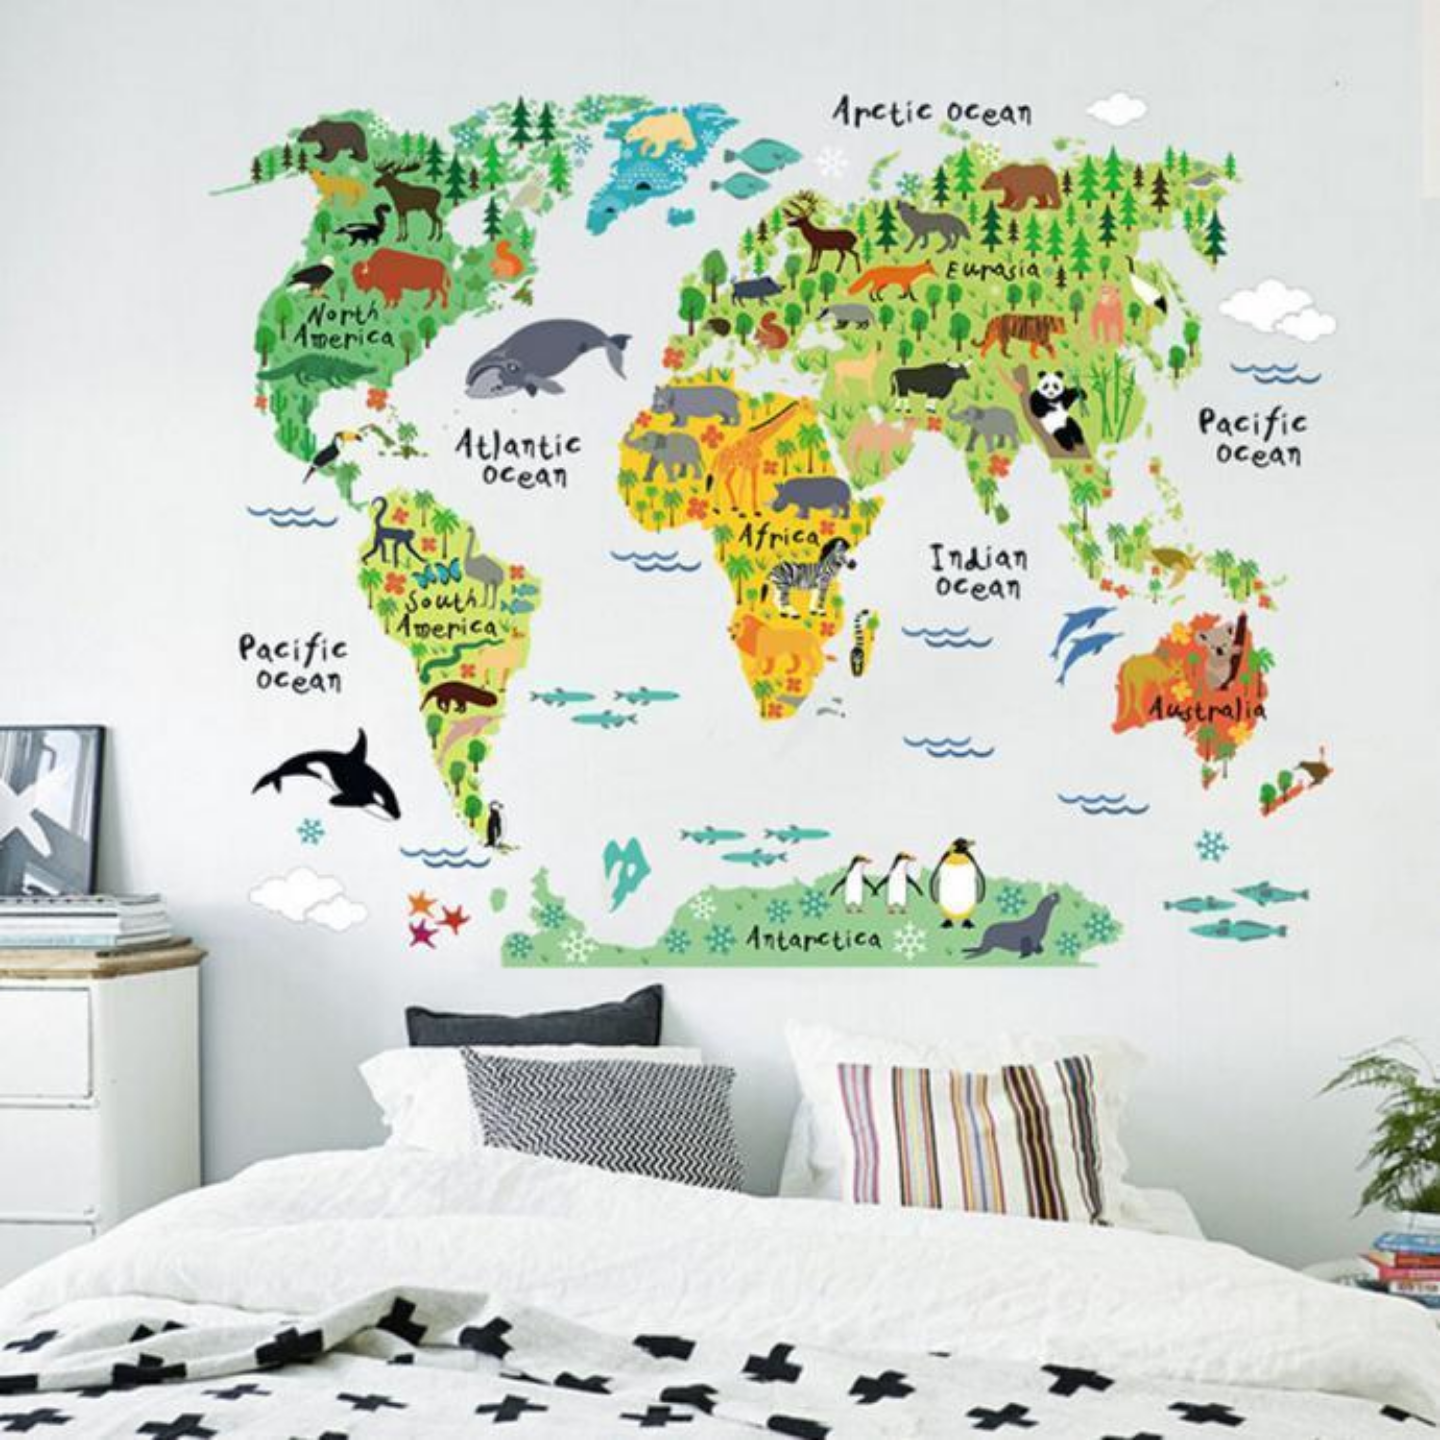 Sticker educativ copii, harta geografica a lumii